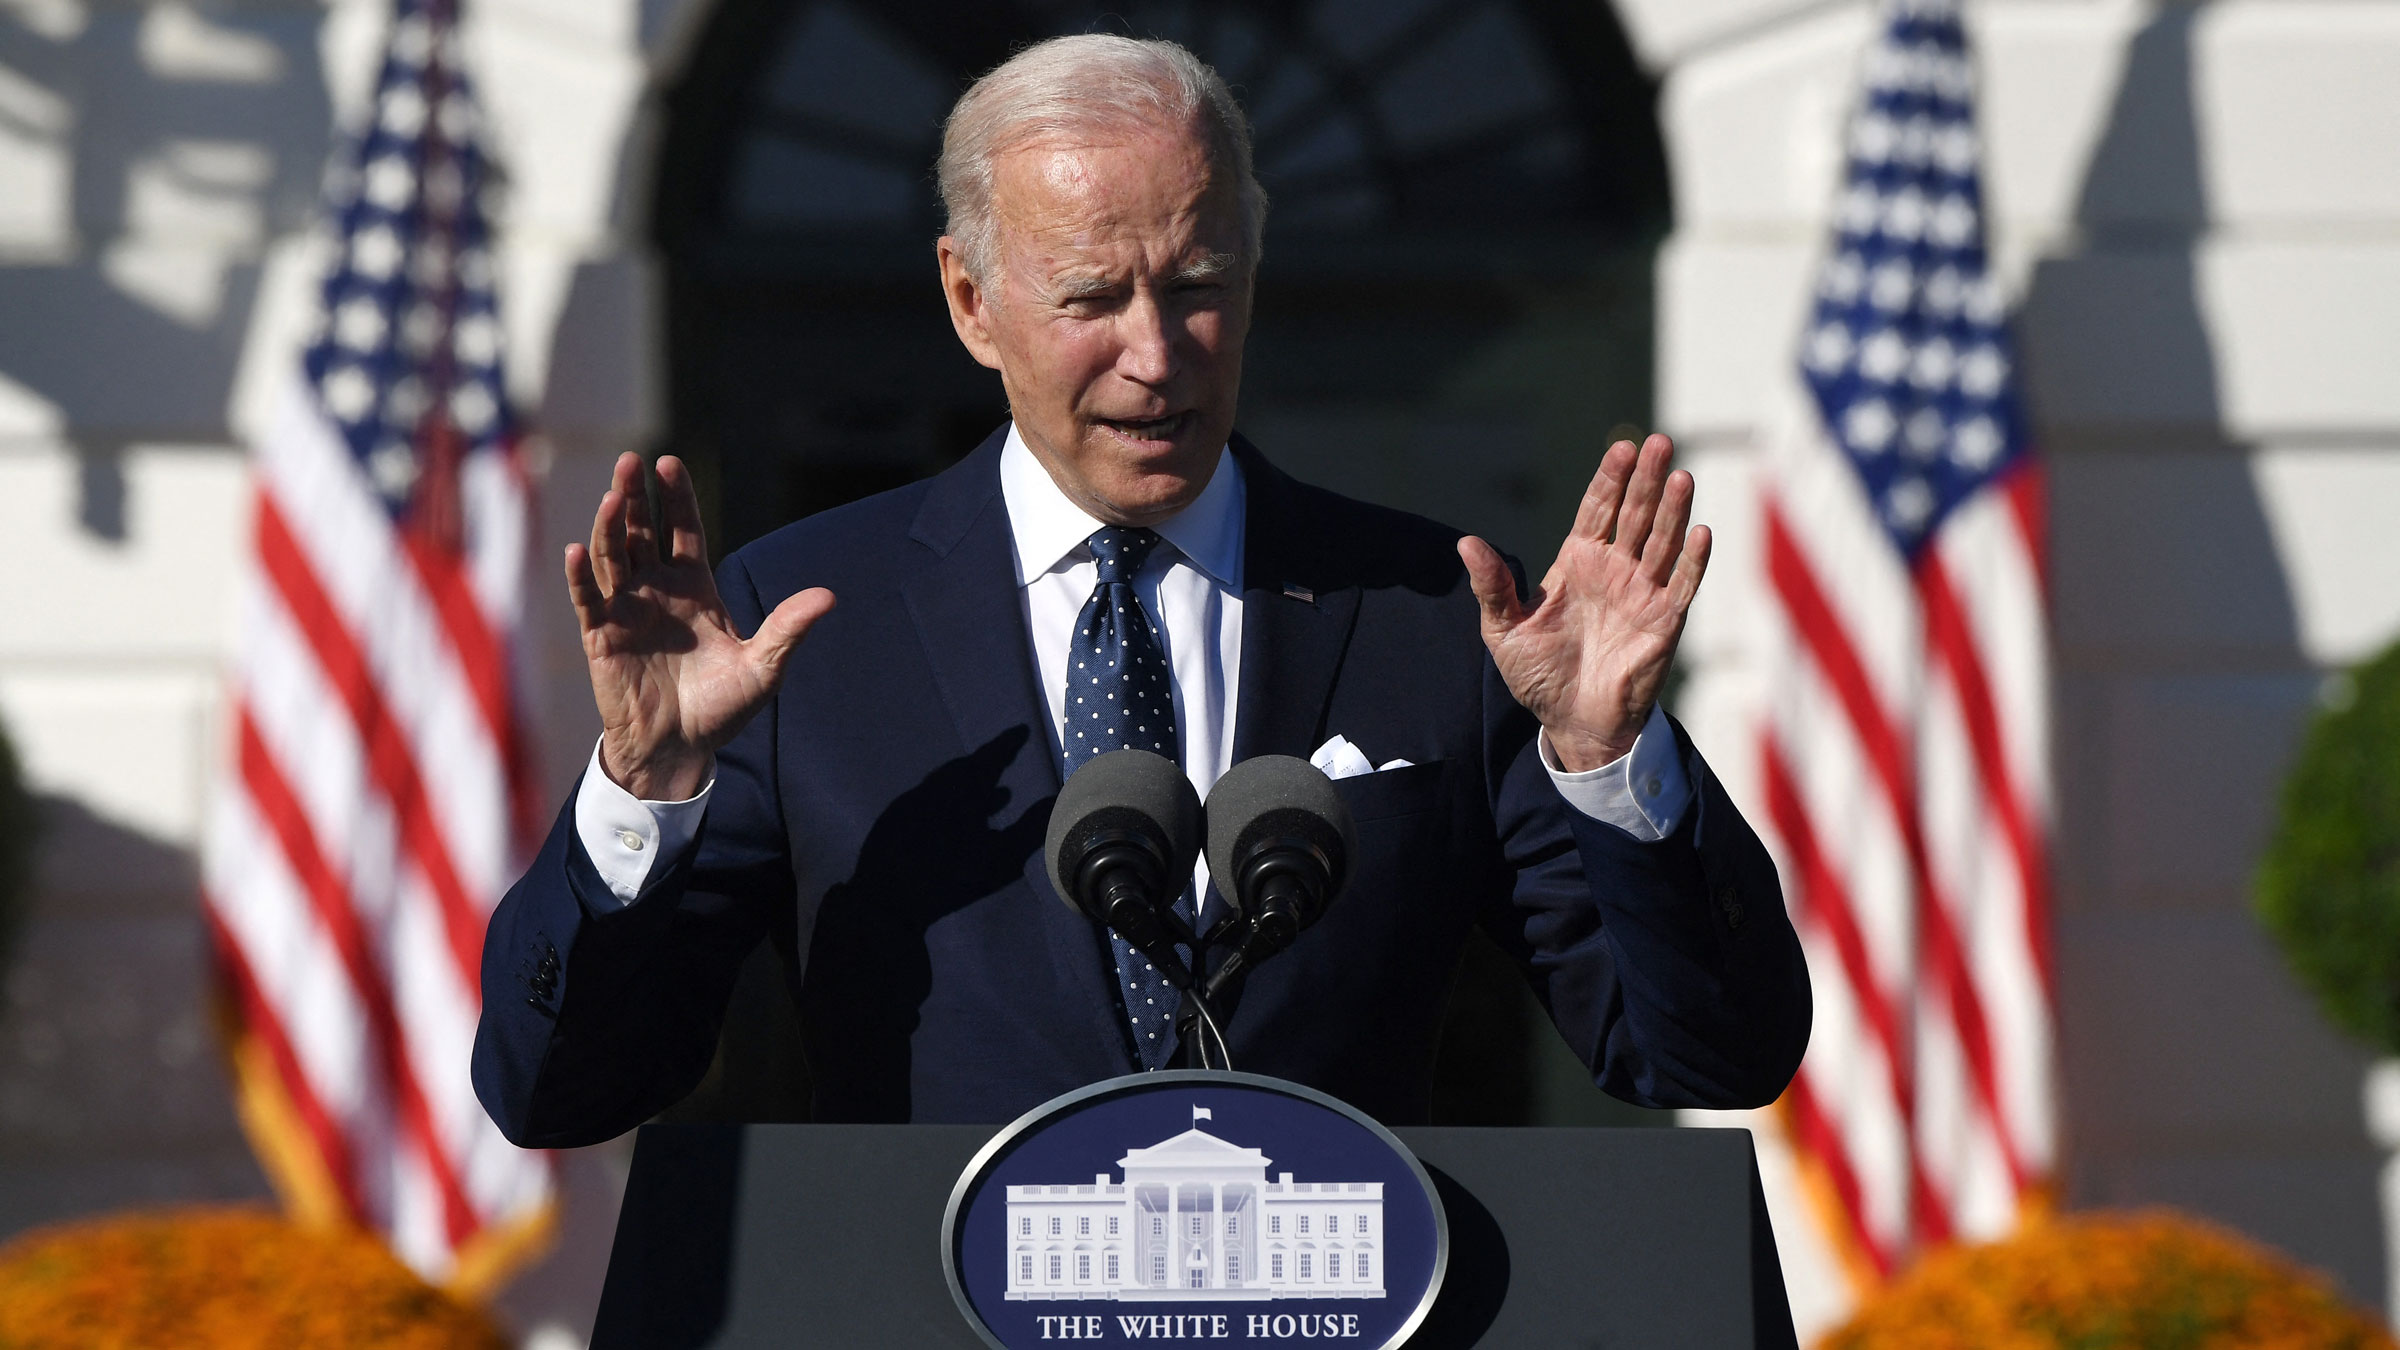 President Joe Biden speaks during a White House event on Monday.